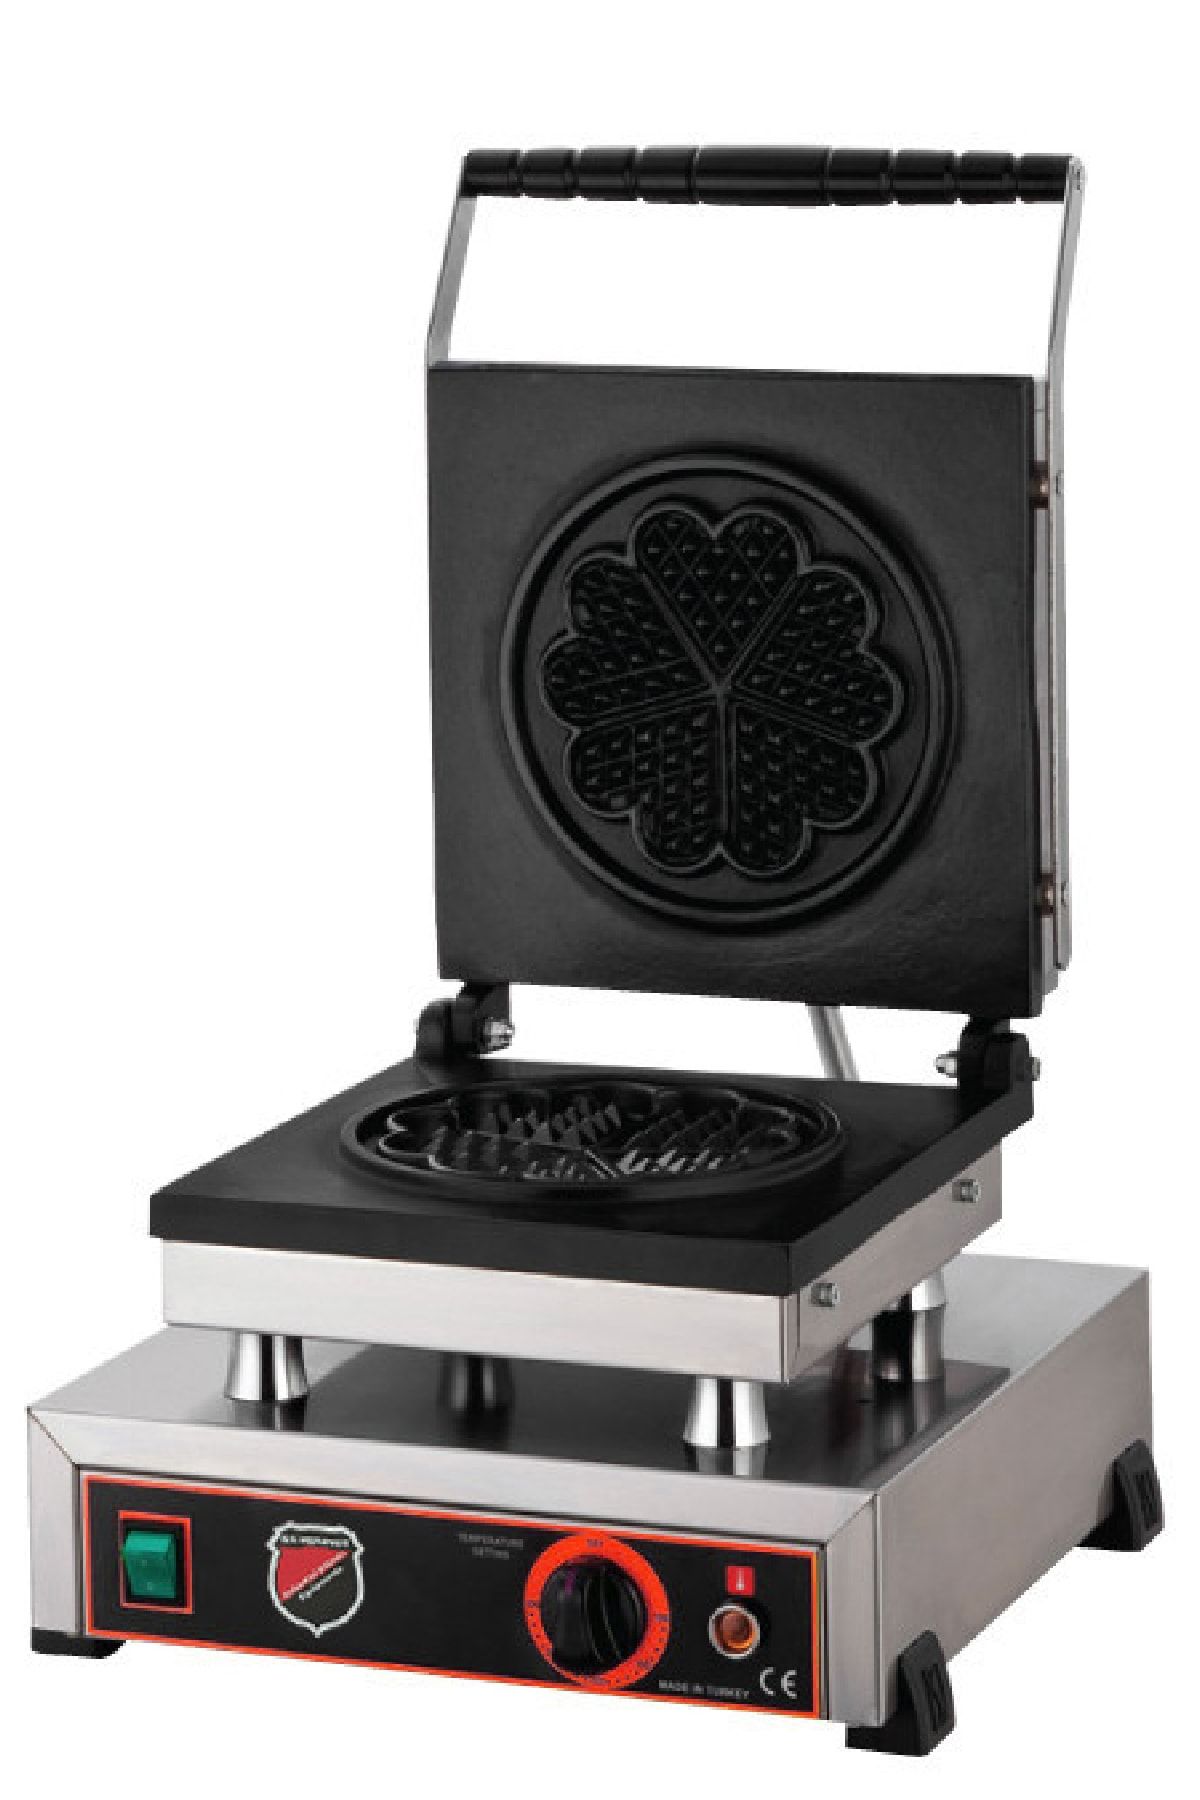 Işıkgaz Tekli Çiçek Waffle Makinesi 1000 W. Endüstriyel Profesyonel